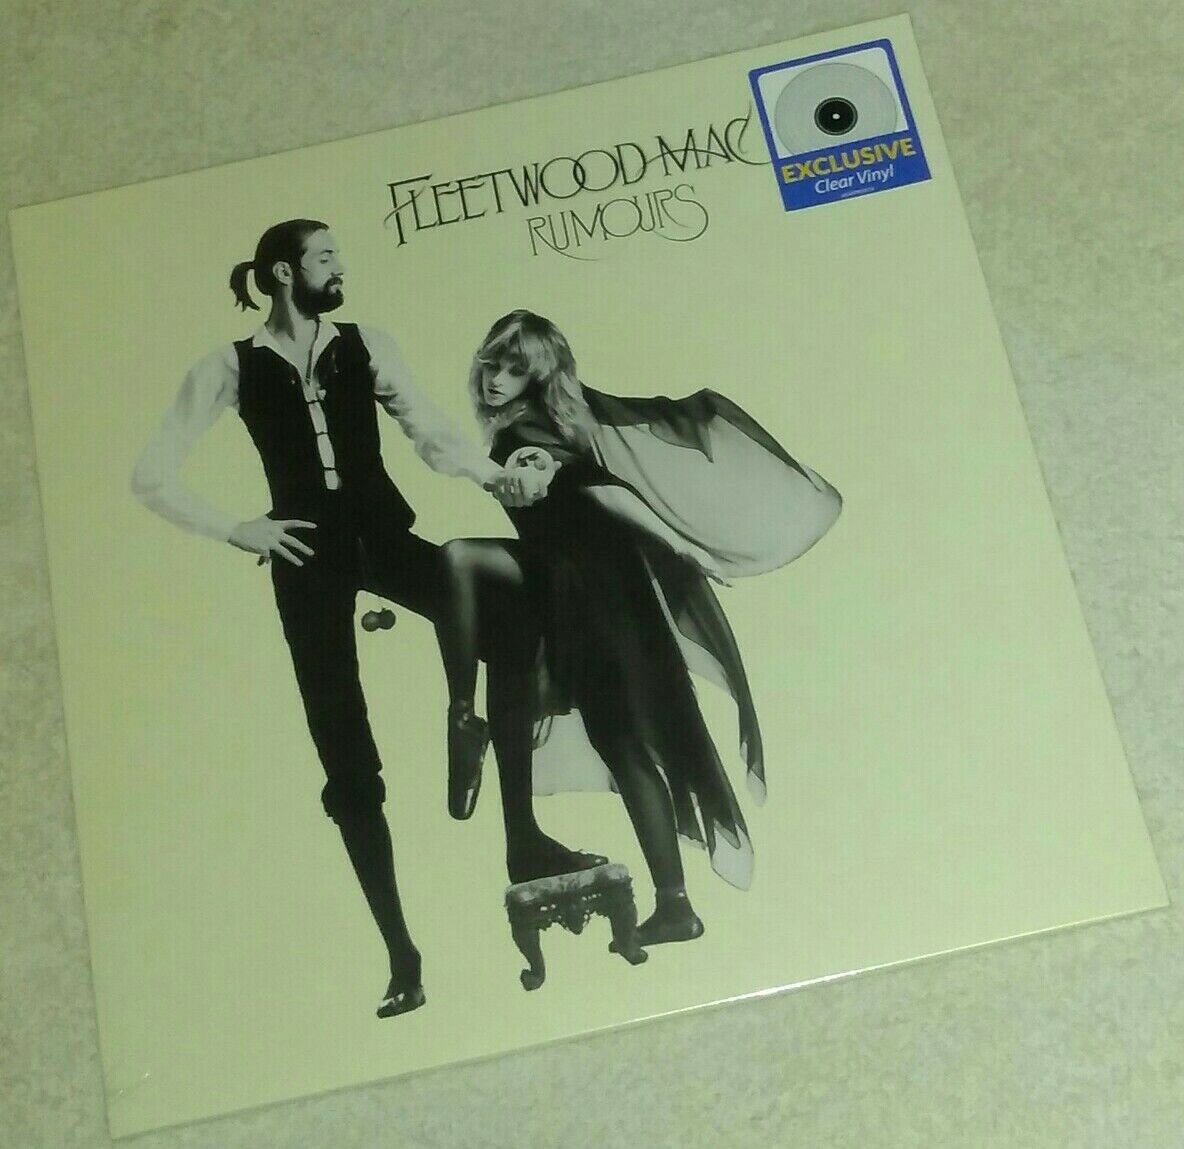 FLEETWOOD MAC RUMORS Exclusive Rare CLEAR VINYL RECORD LP  brand new